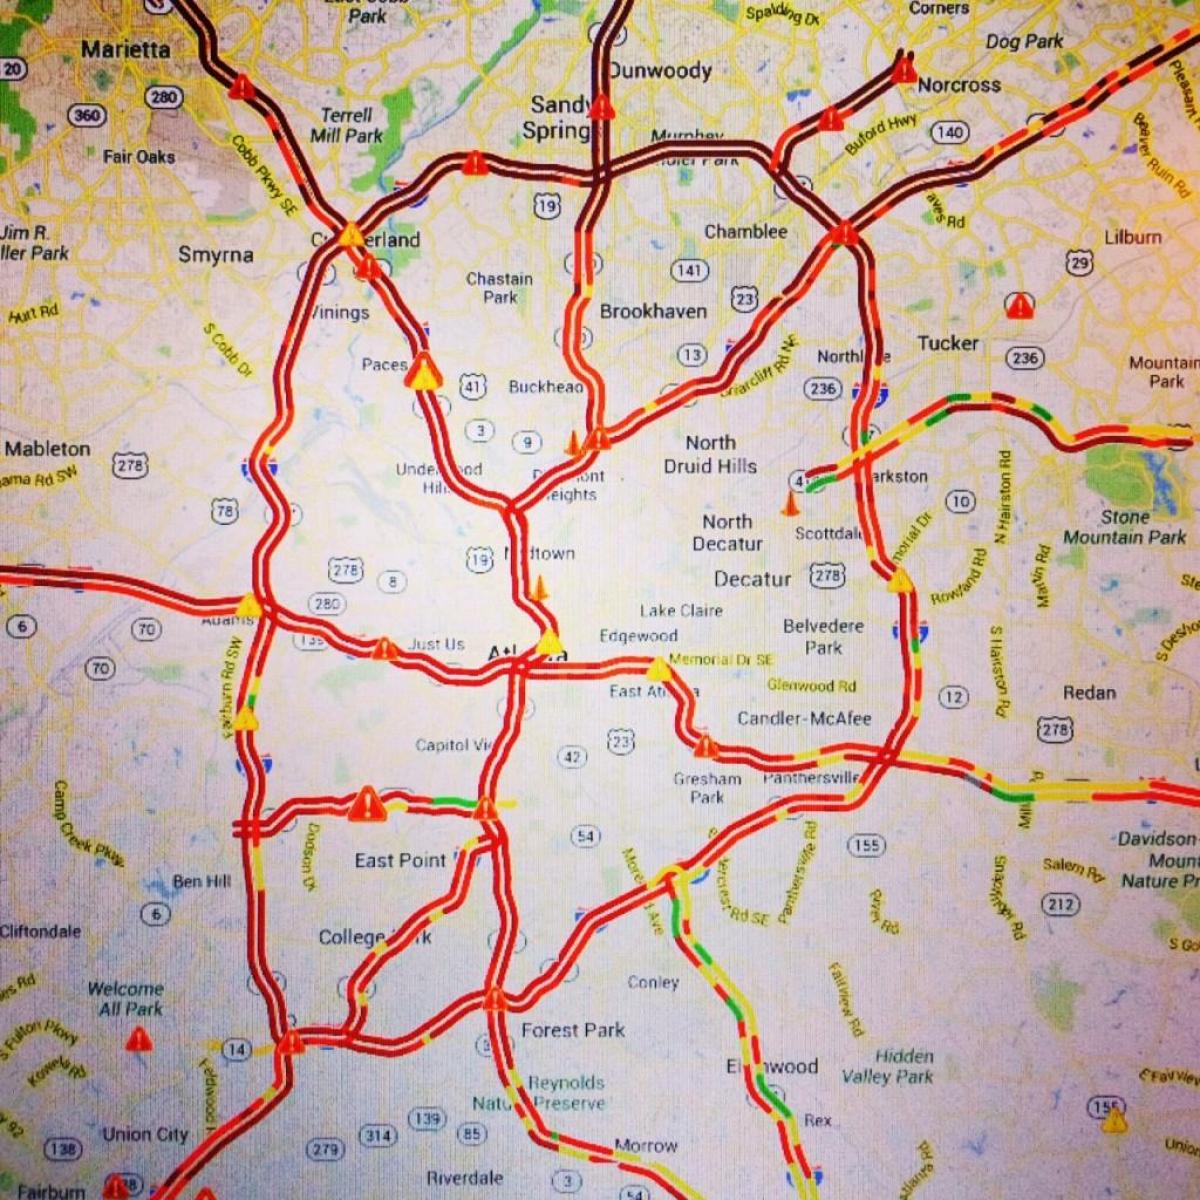 kort over Atlanta trafik